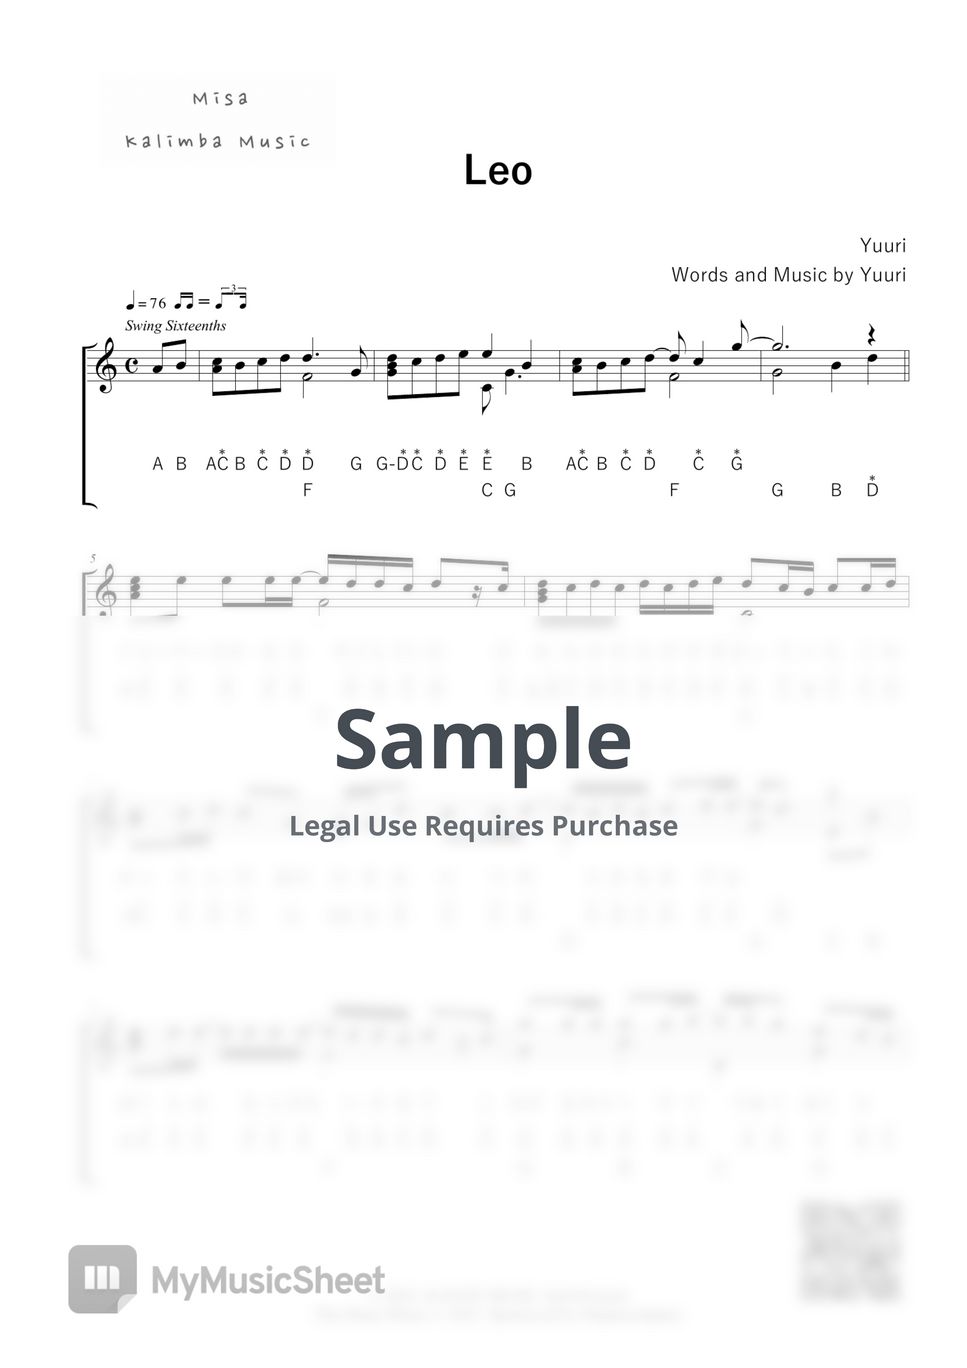 Yuuri - Leo / Letter Notation by Misa / Kalimba Music